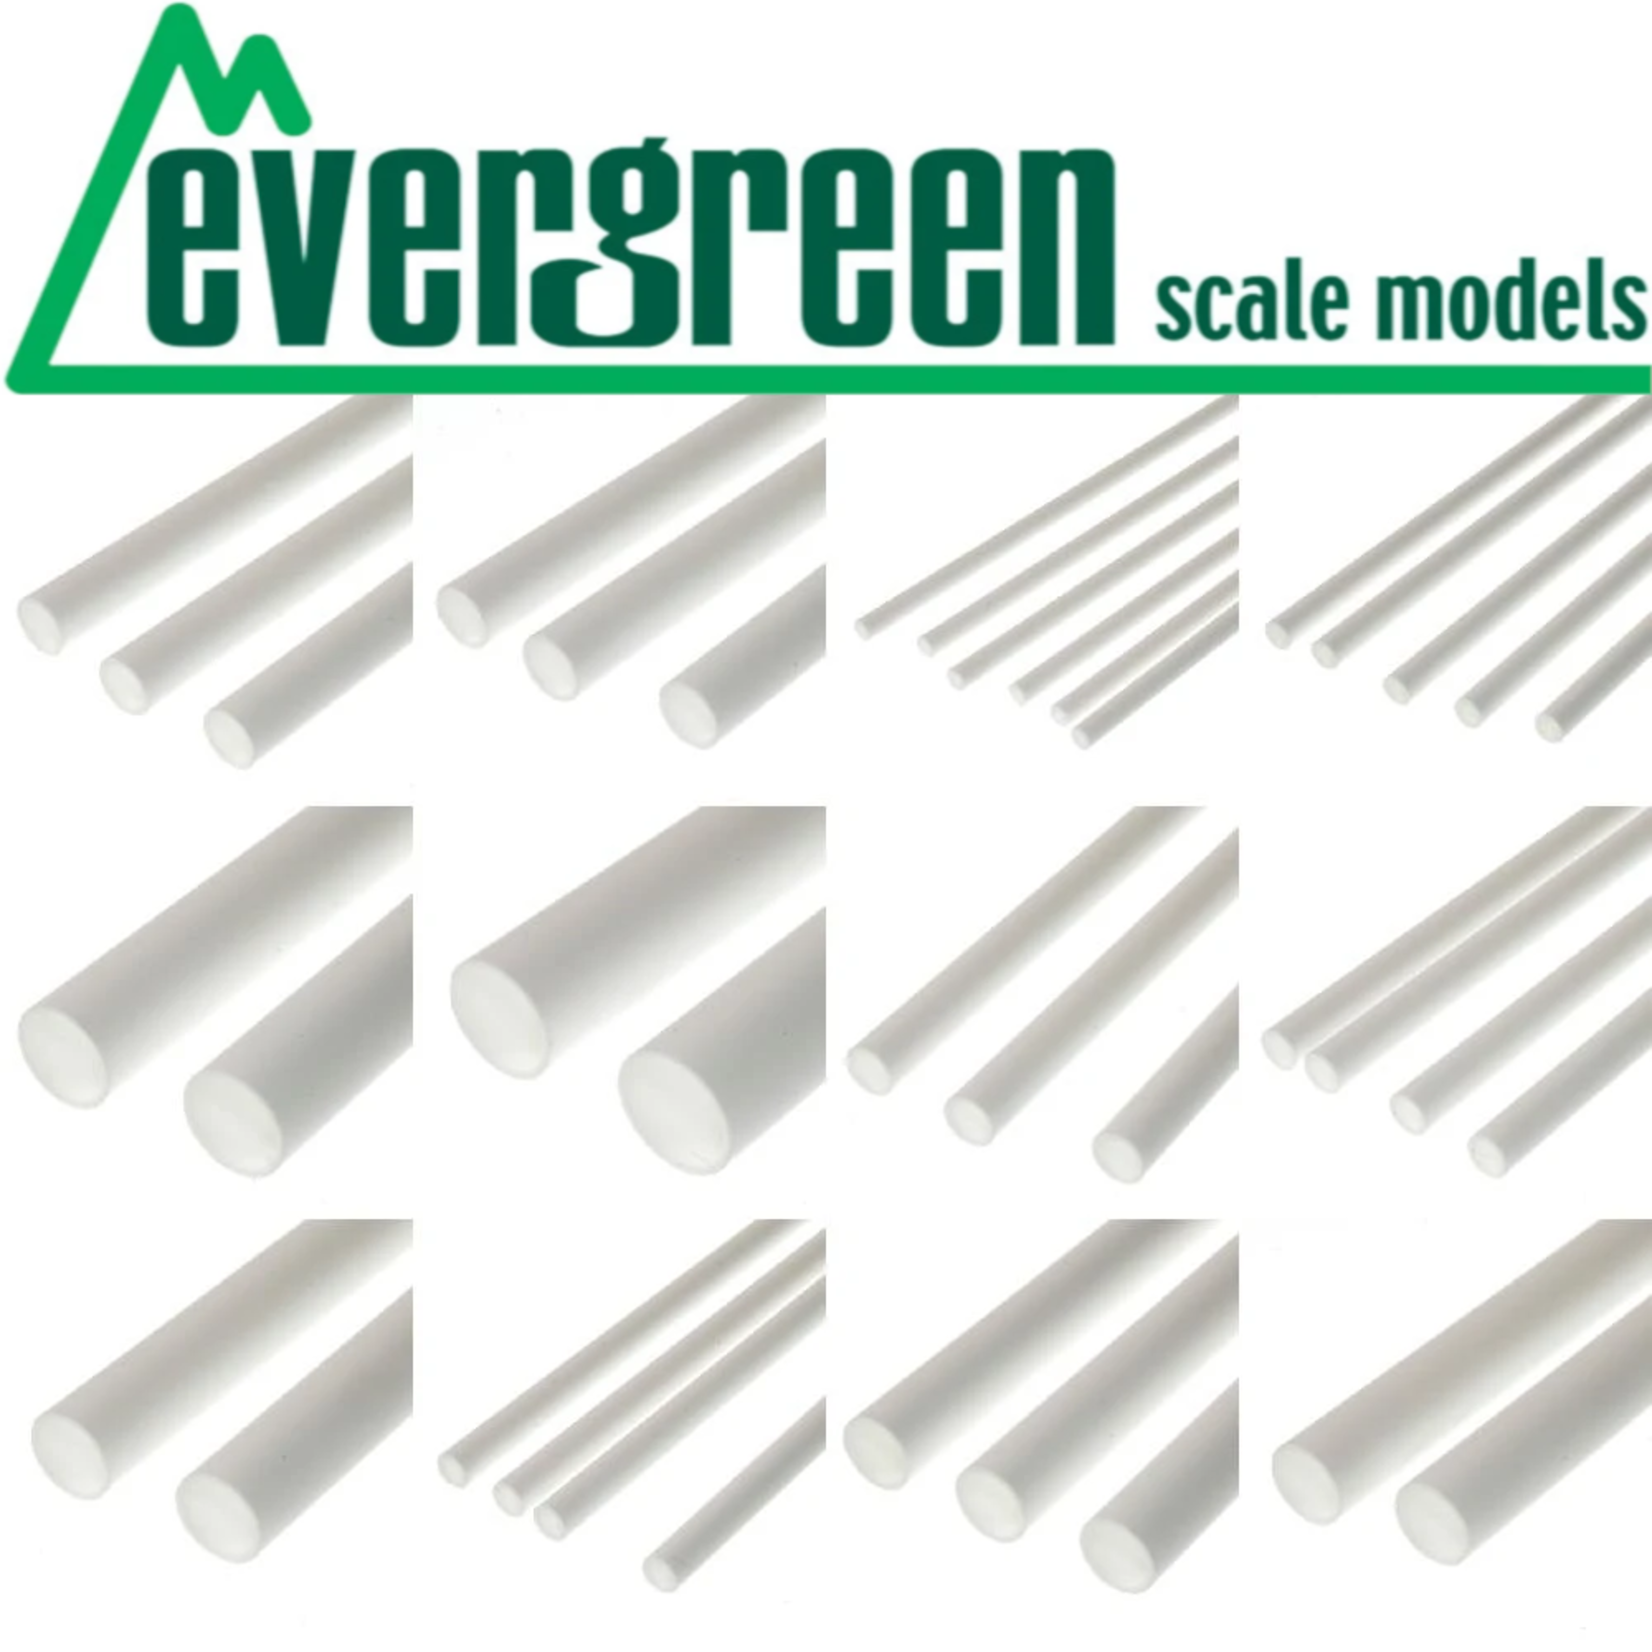 Evergreen Scale Models EVE285 Styrene 5/32'' H-Column (3pc)